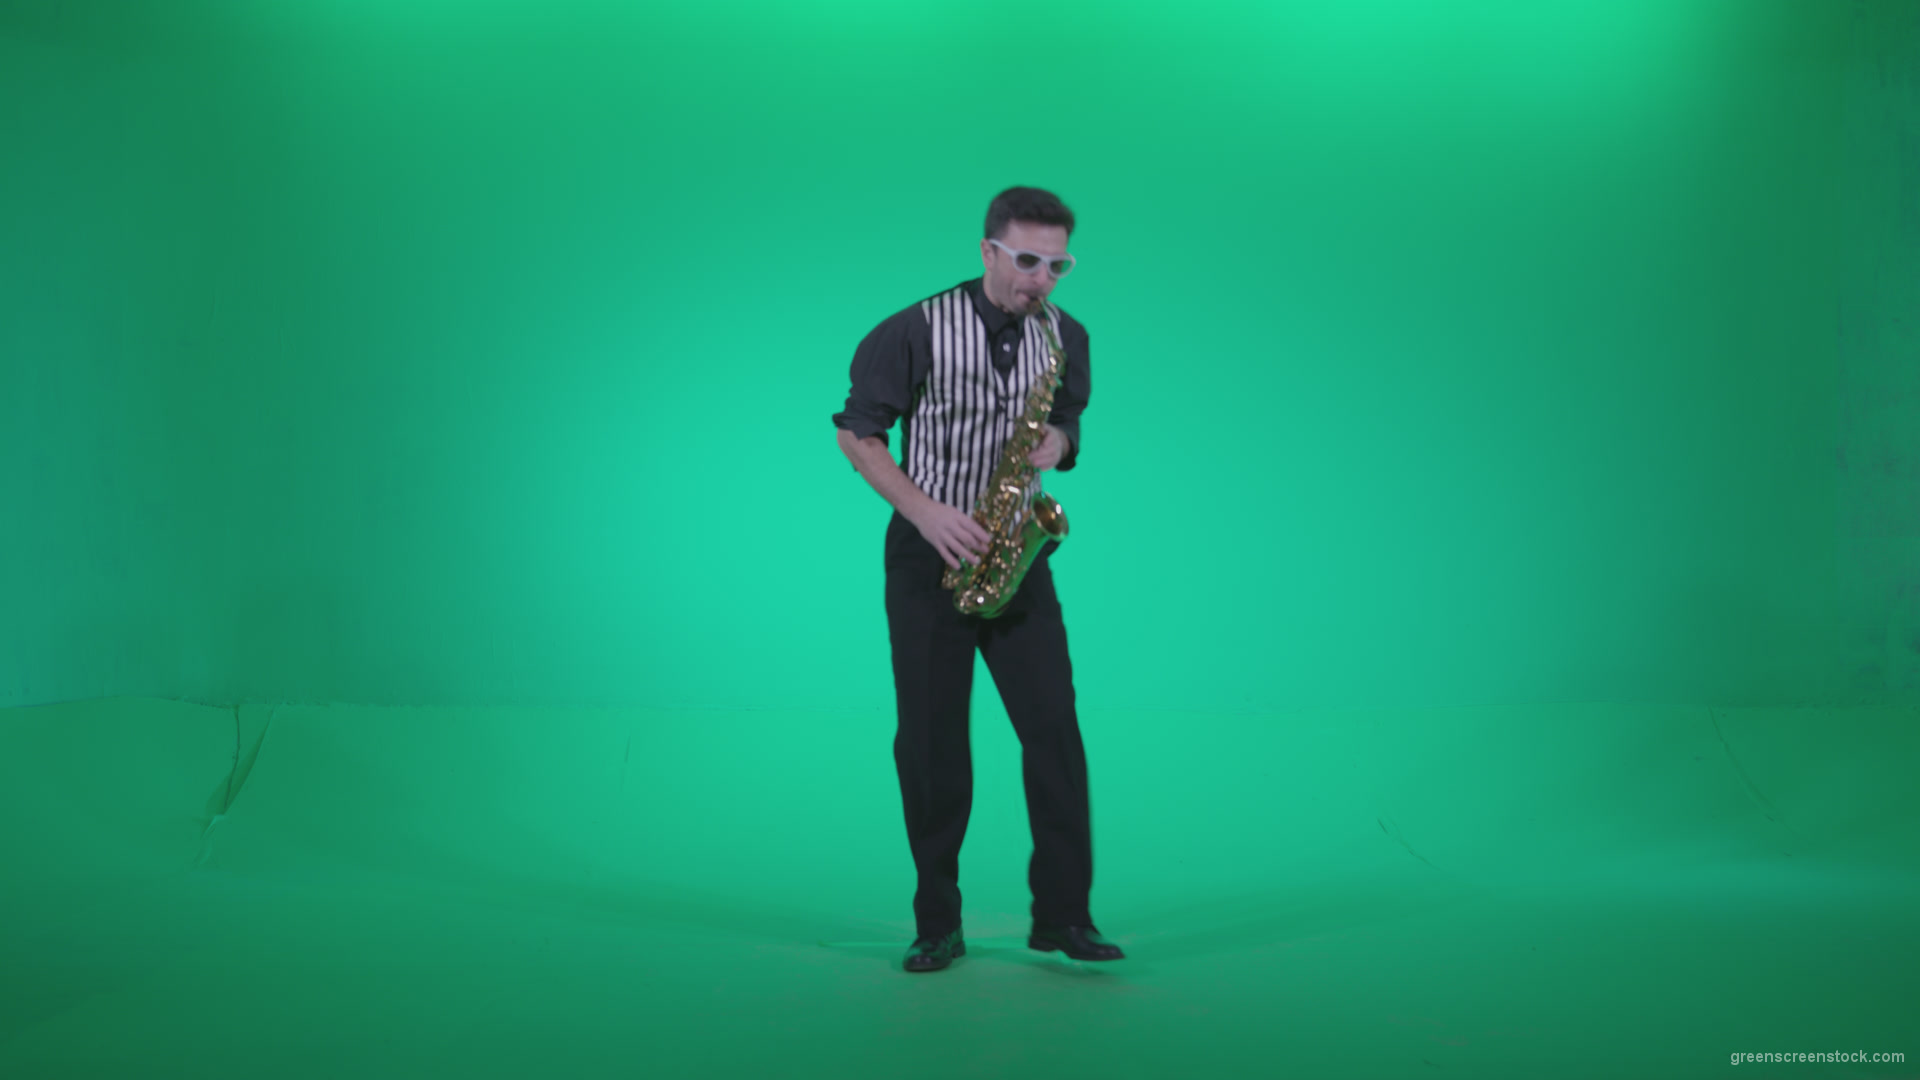 Saxophone-Virtuoso-Performer-s4_007 Green Screen Stock